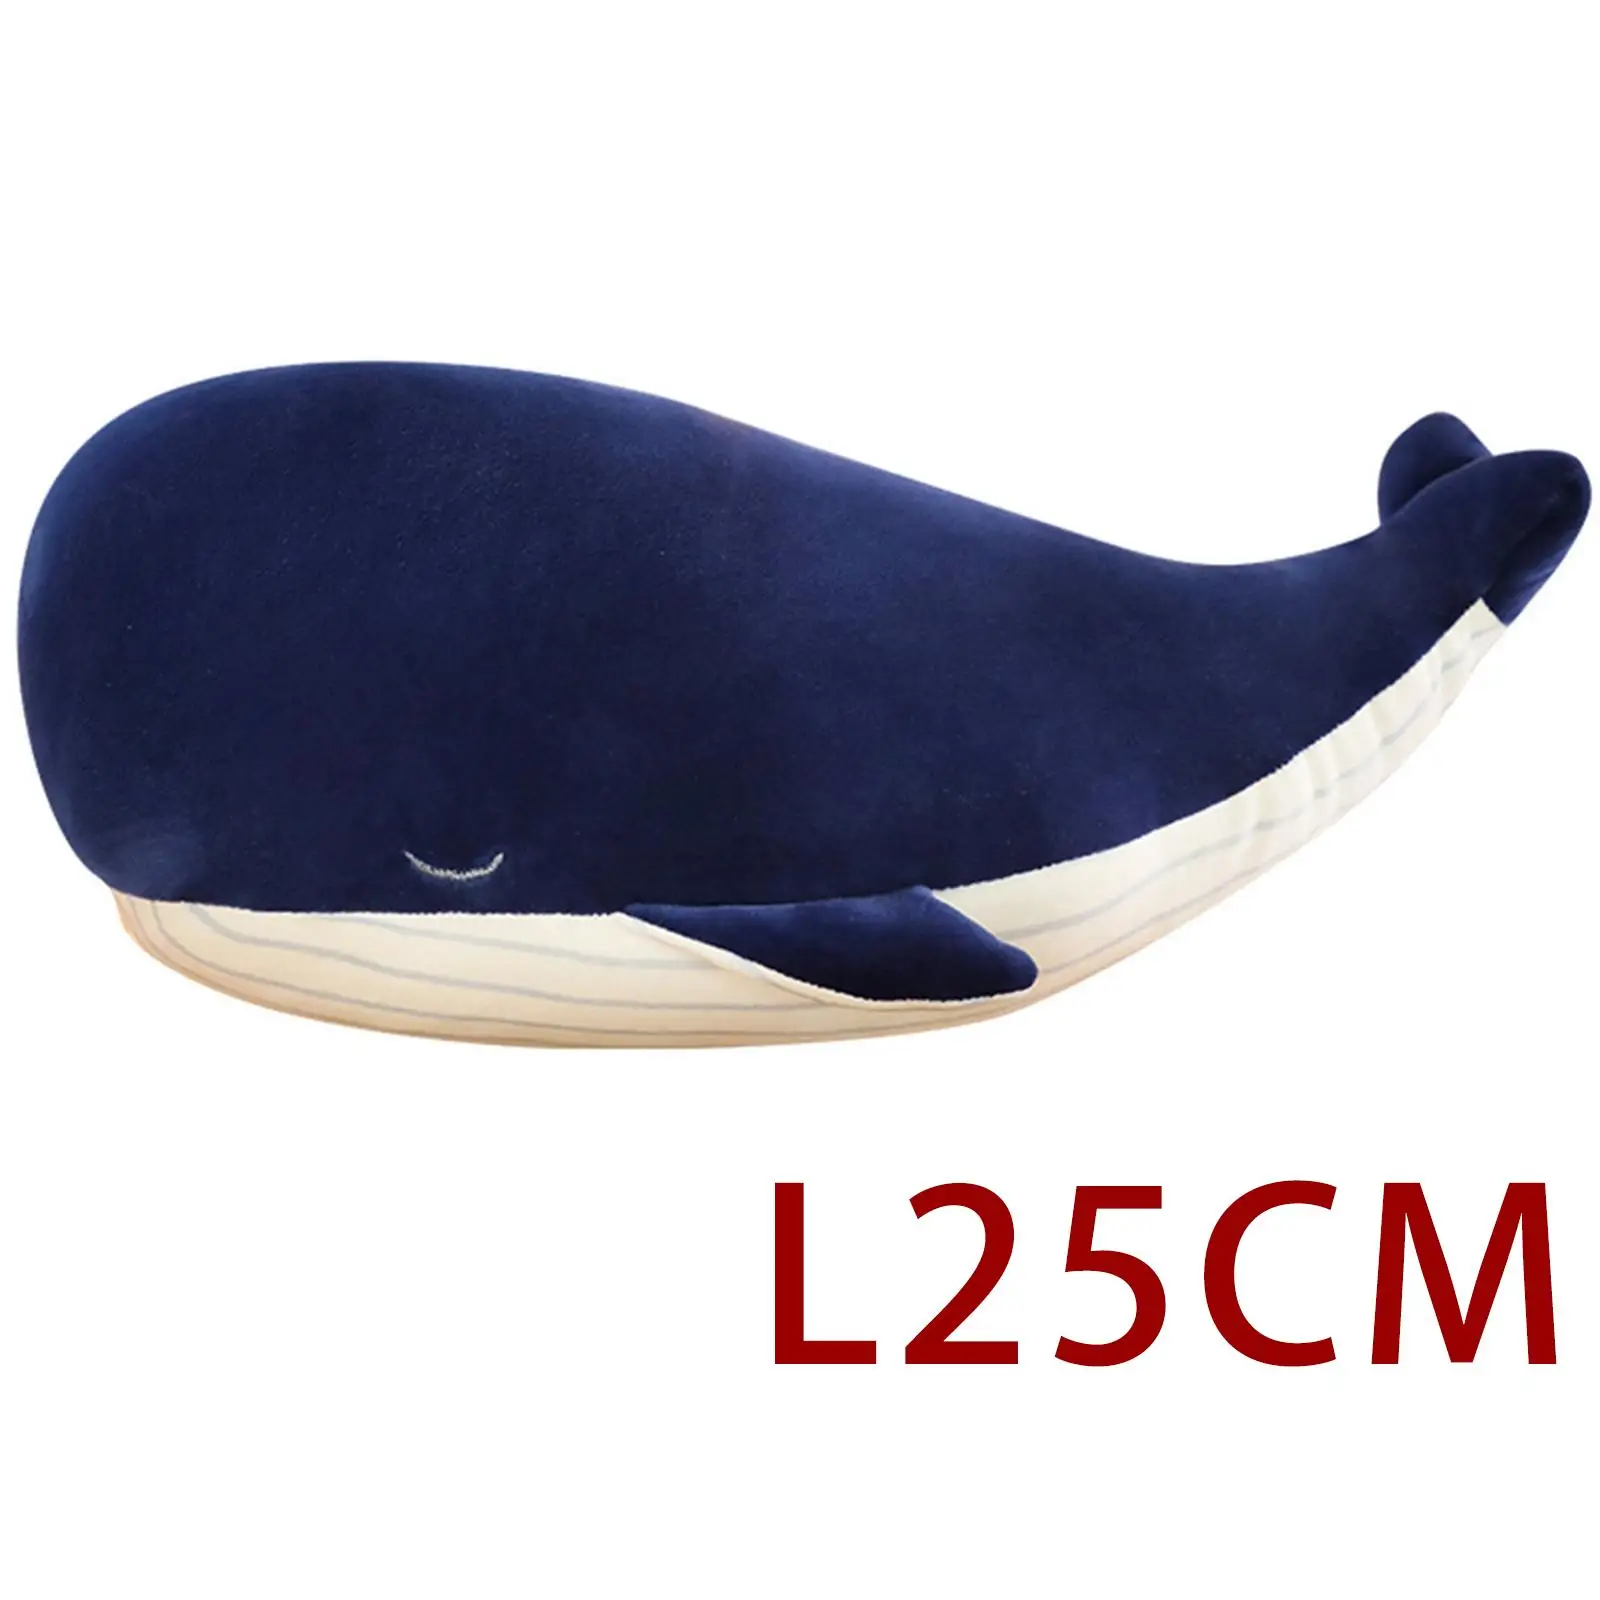 Plush Blue Whale Animal Toy Super Soft Decorative Sofa Toy Realistic Marine Life Sea Animal Pillow New Year Gift